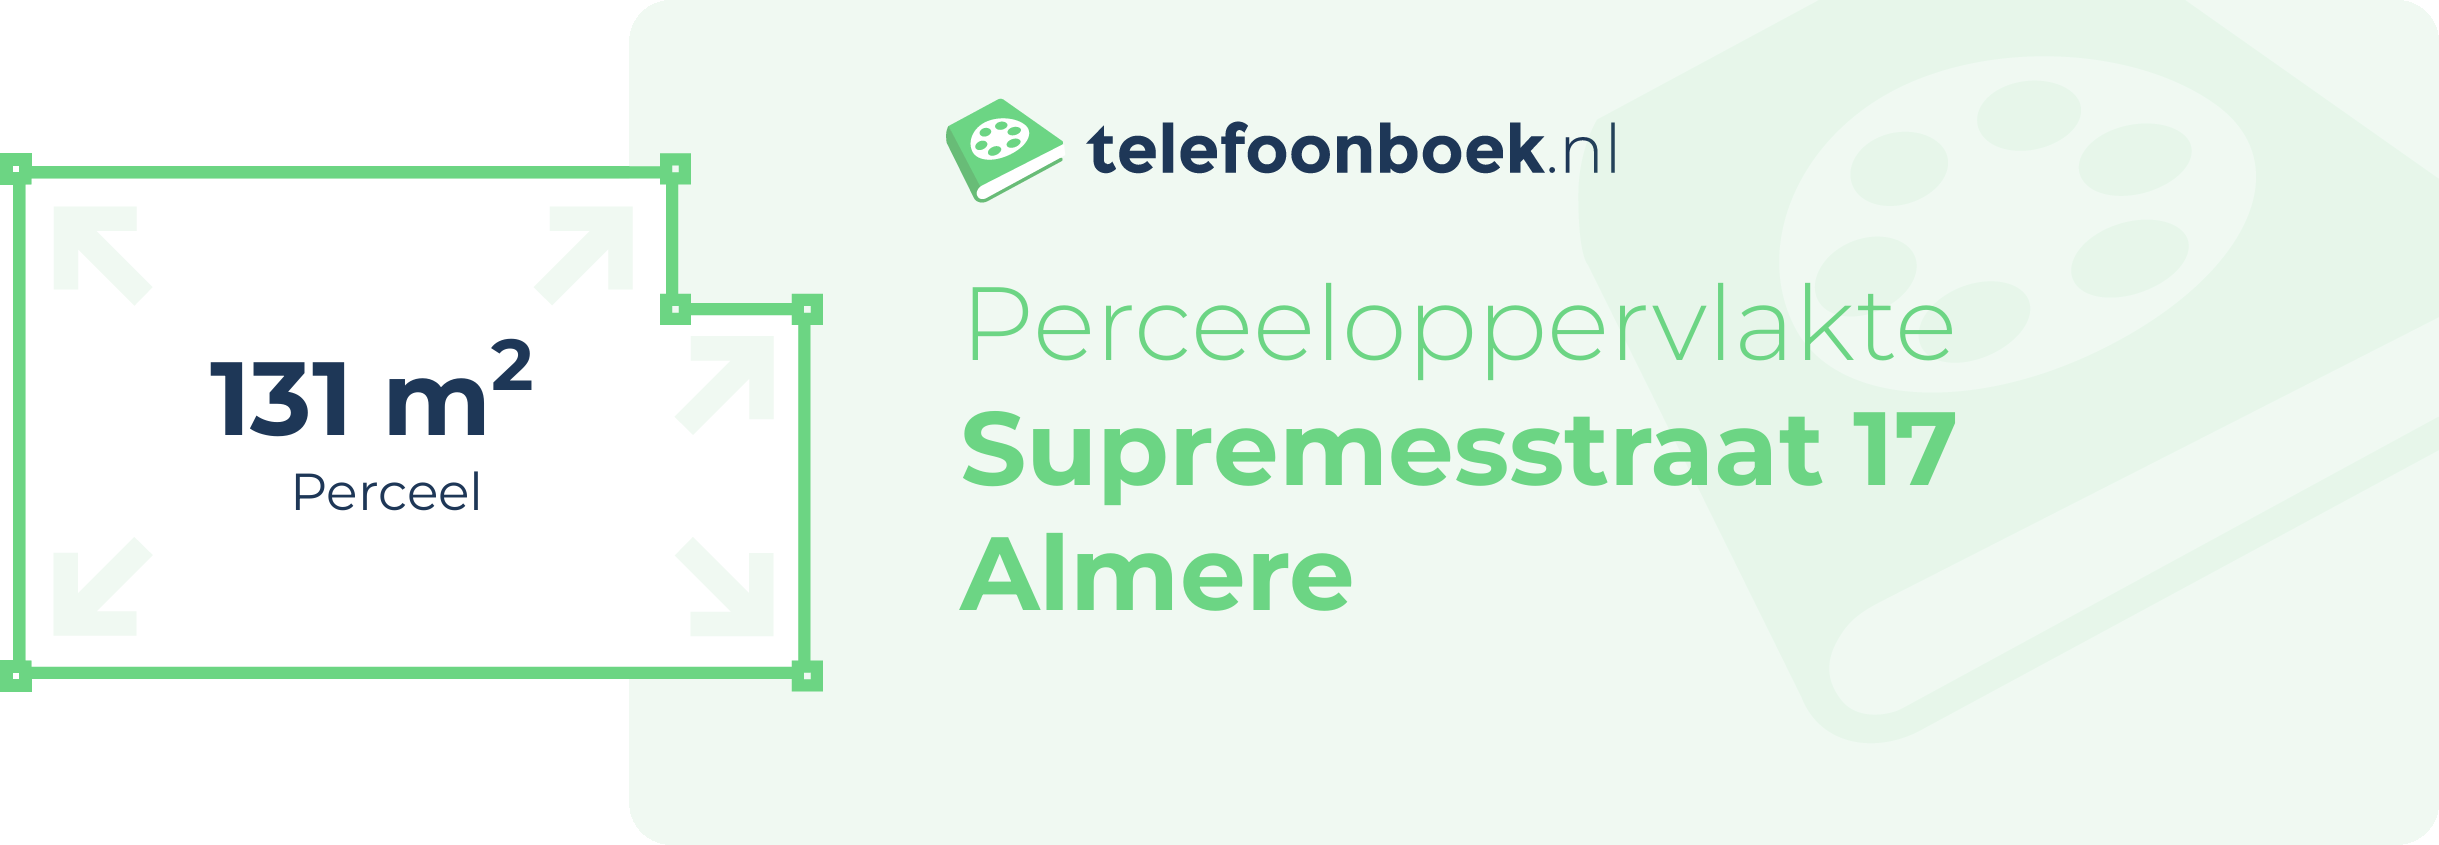 Perceeloppervlakte Supremesstraat 17 Almere